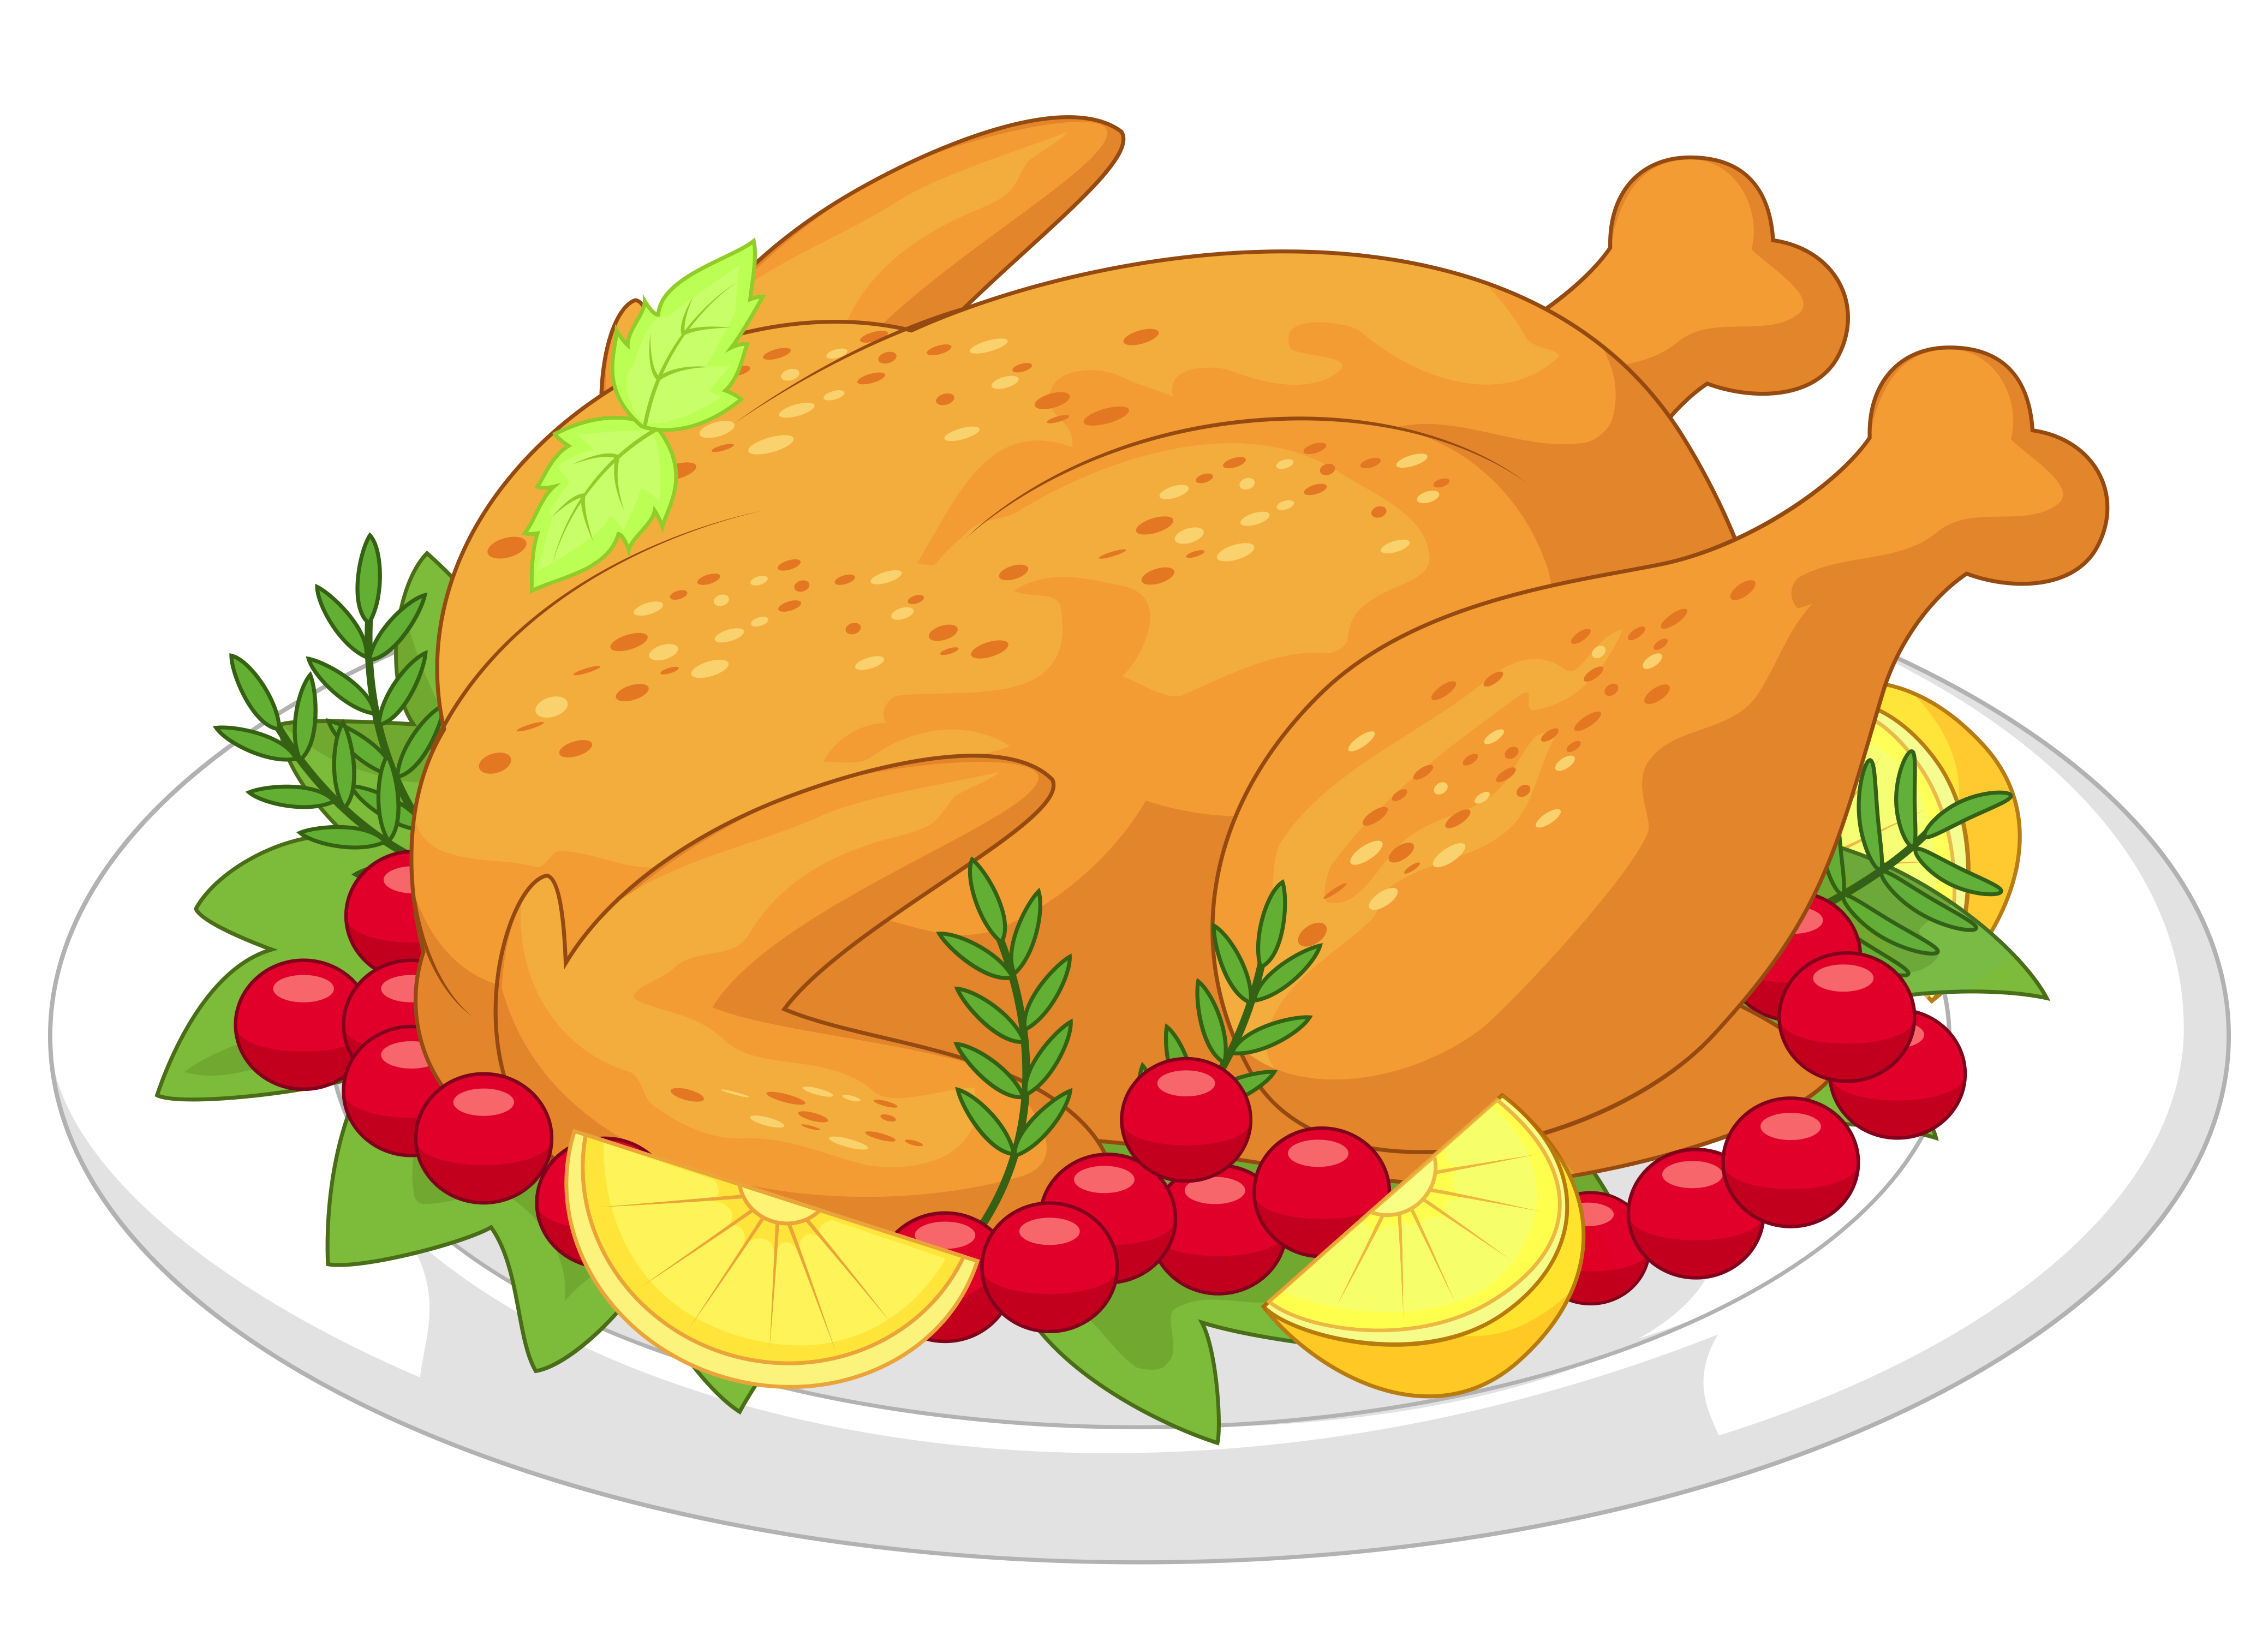 Turkey food PNG